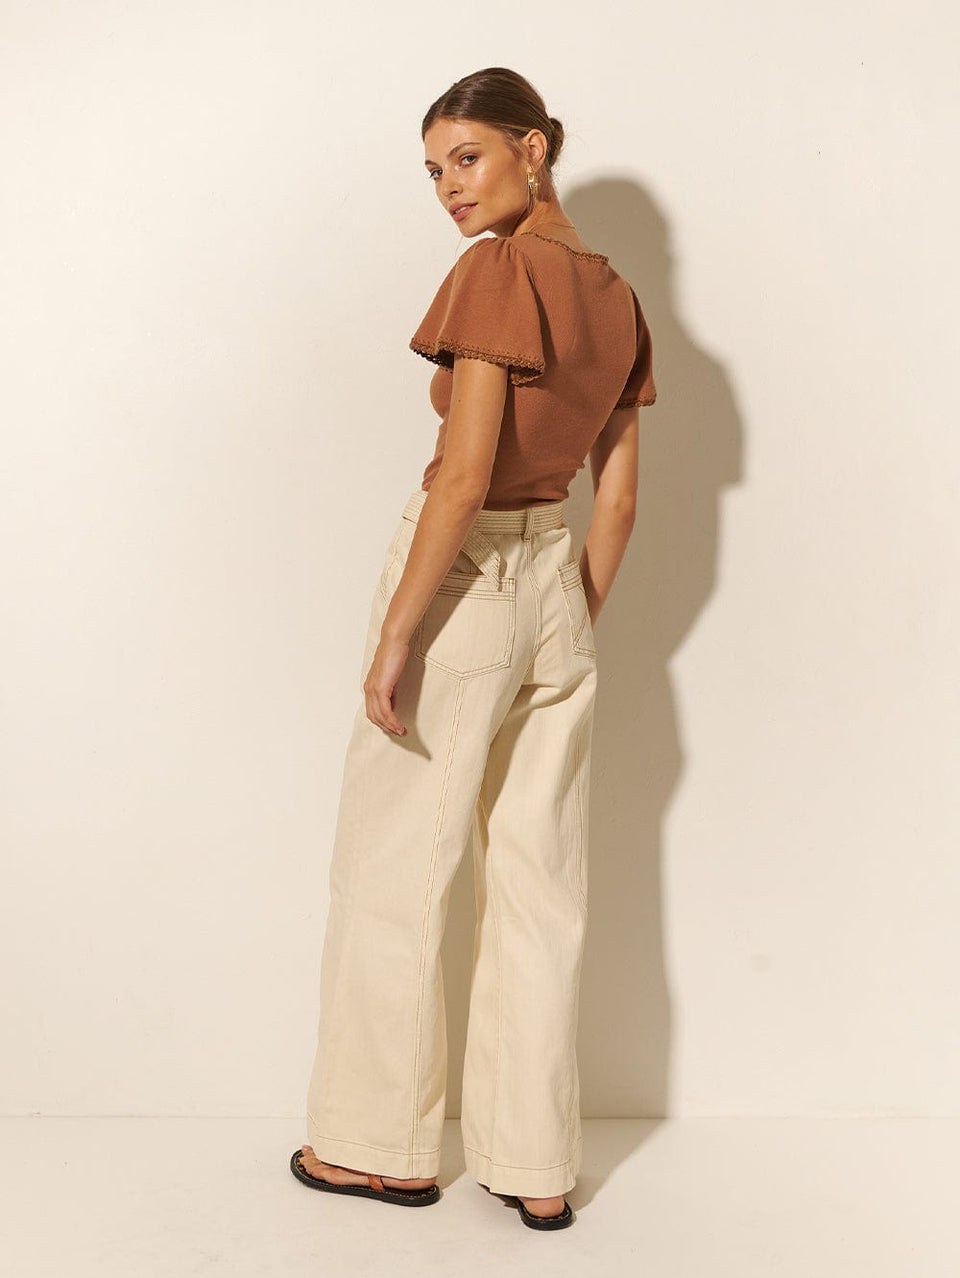 KIVARI Tallulah Tee | Model wears Brown Tee Back View